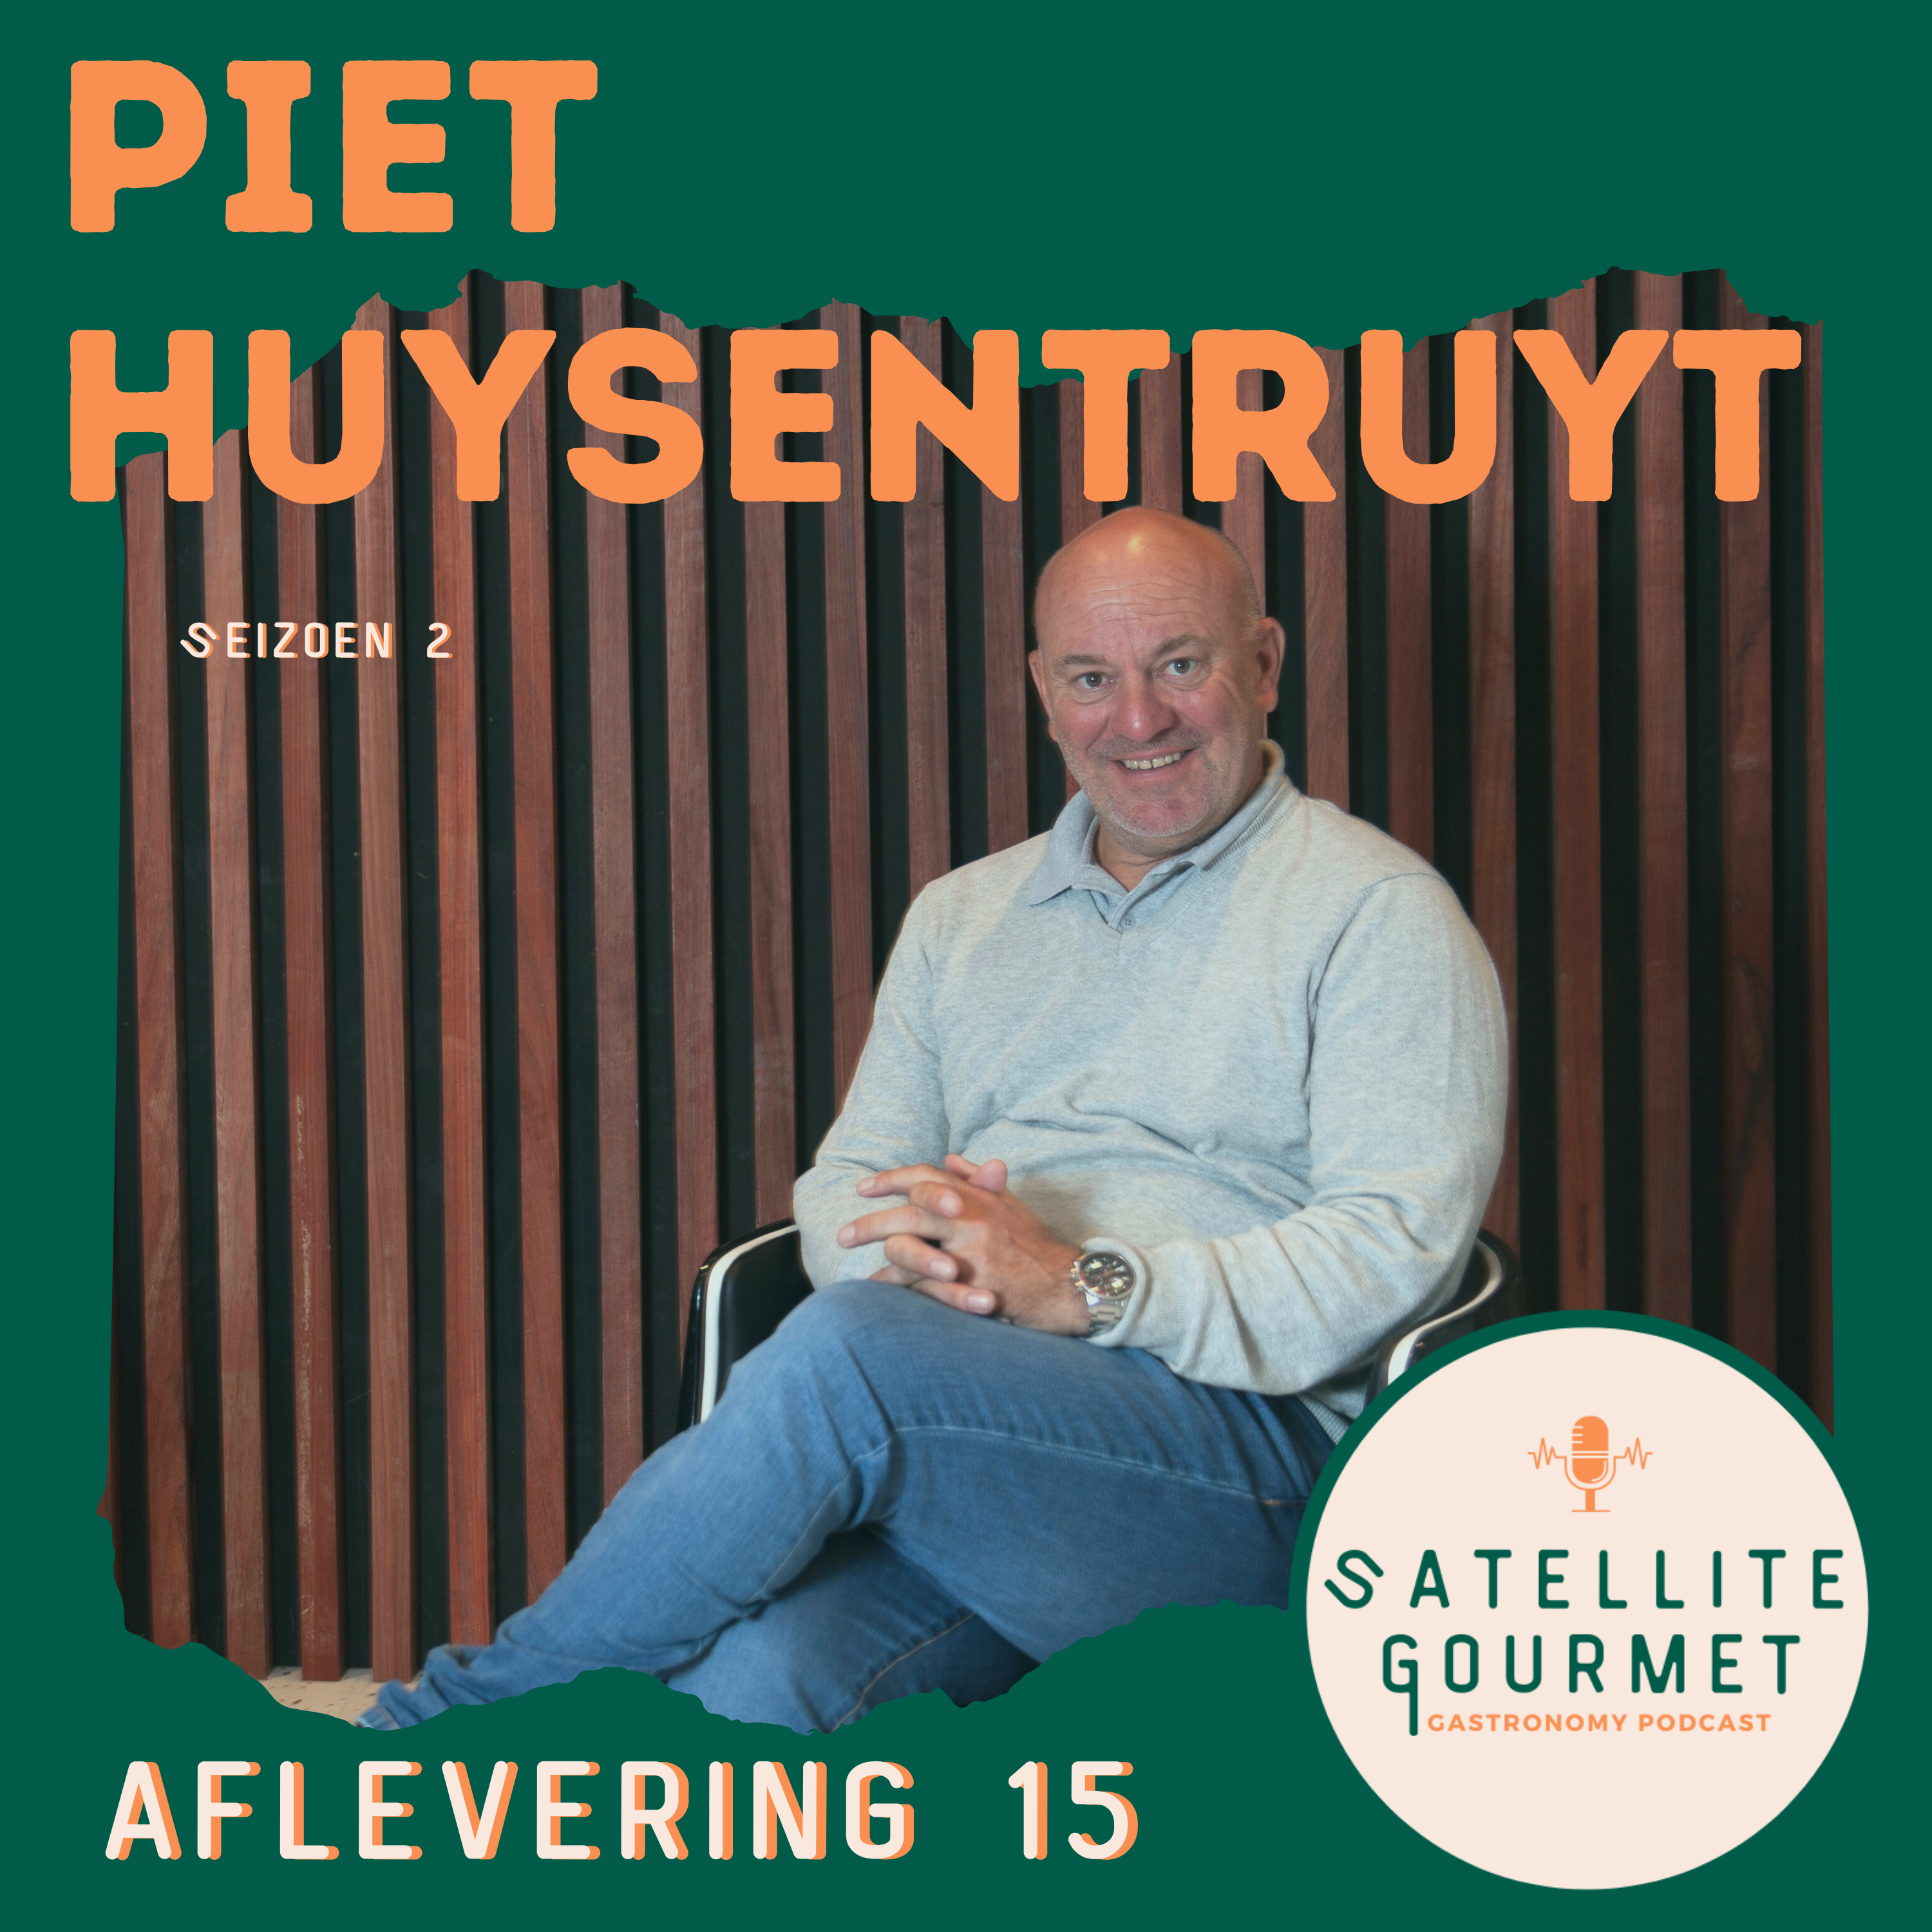 Piet Huysentruyt